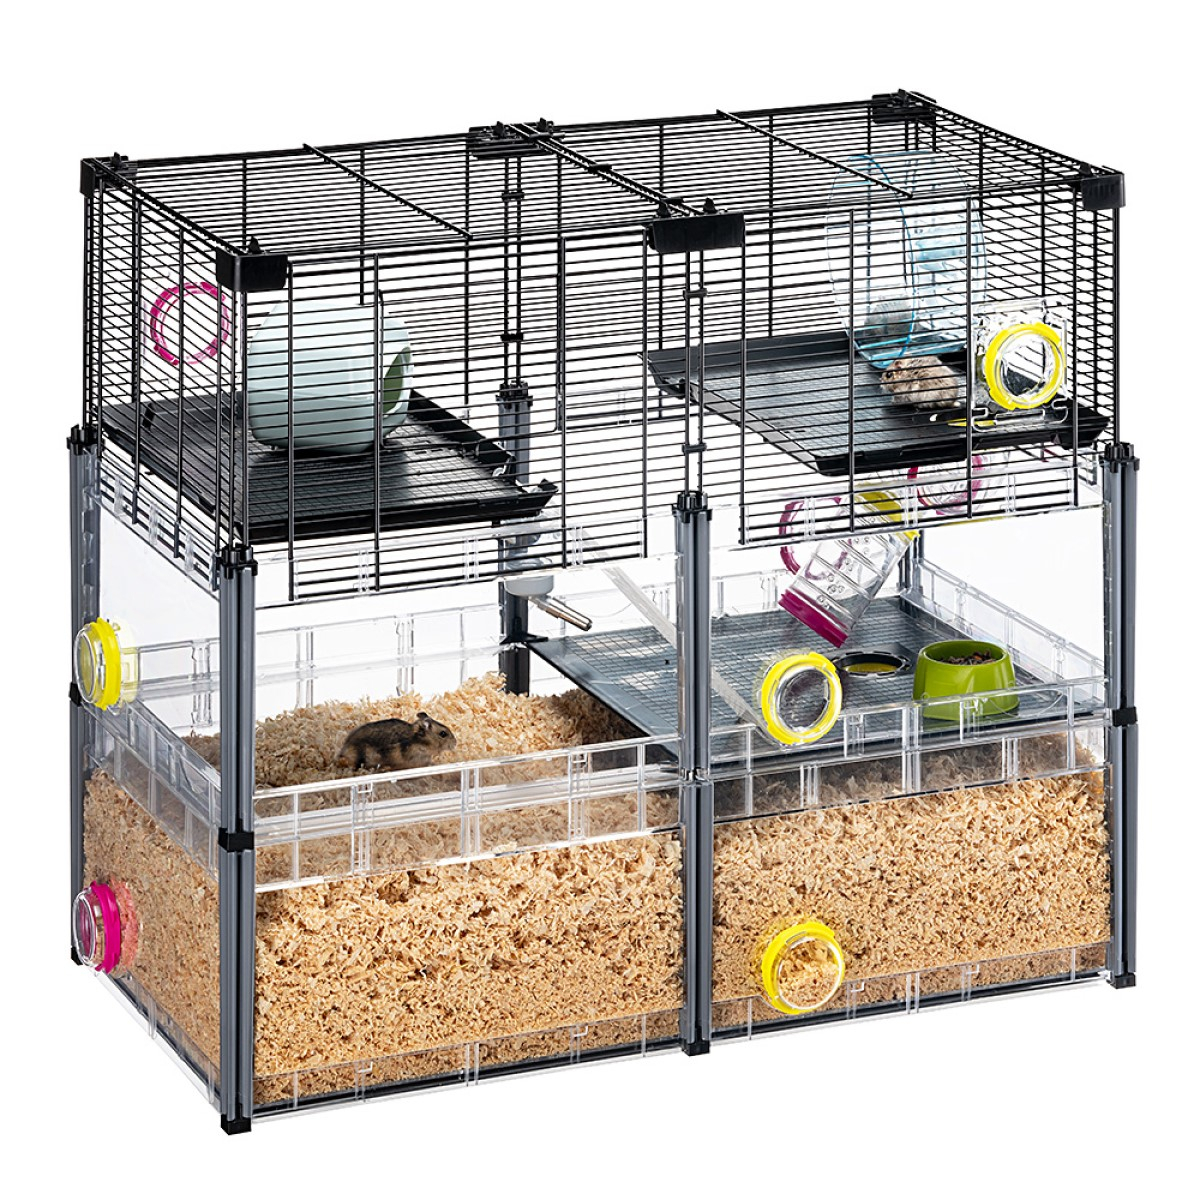 Cage pour Hamster - H62 cm - Ferplast Multipla Crystal 